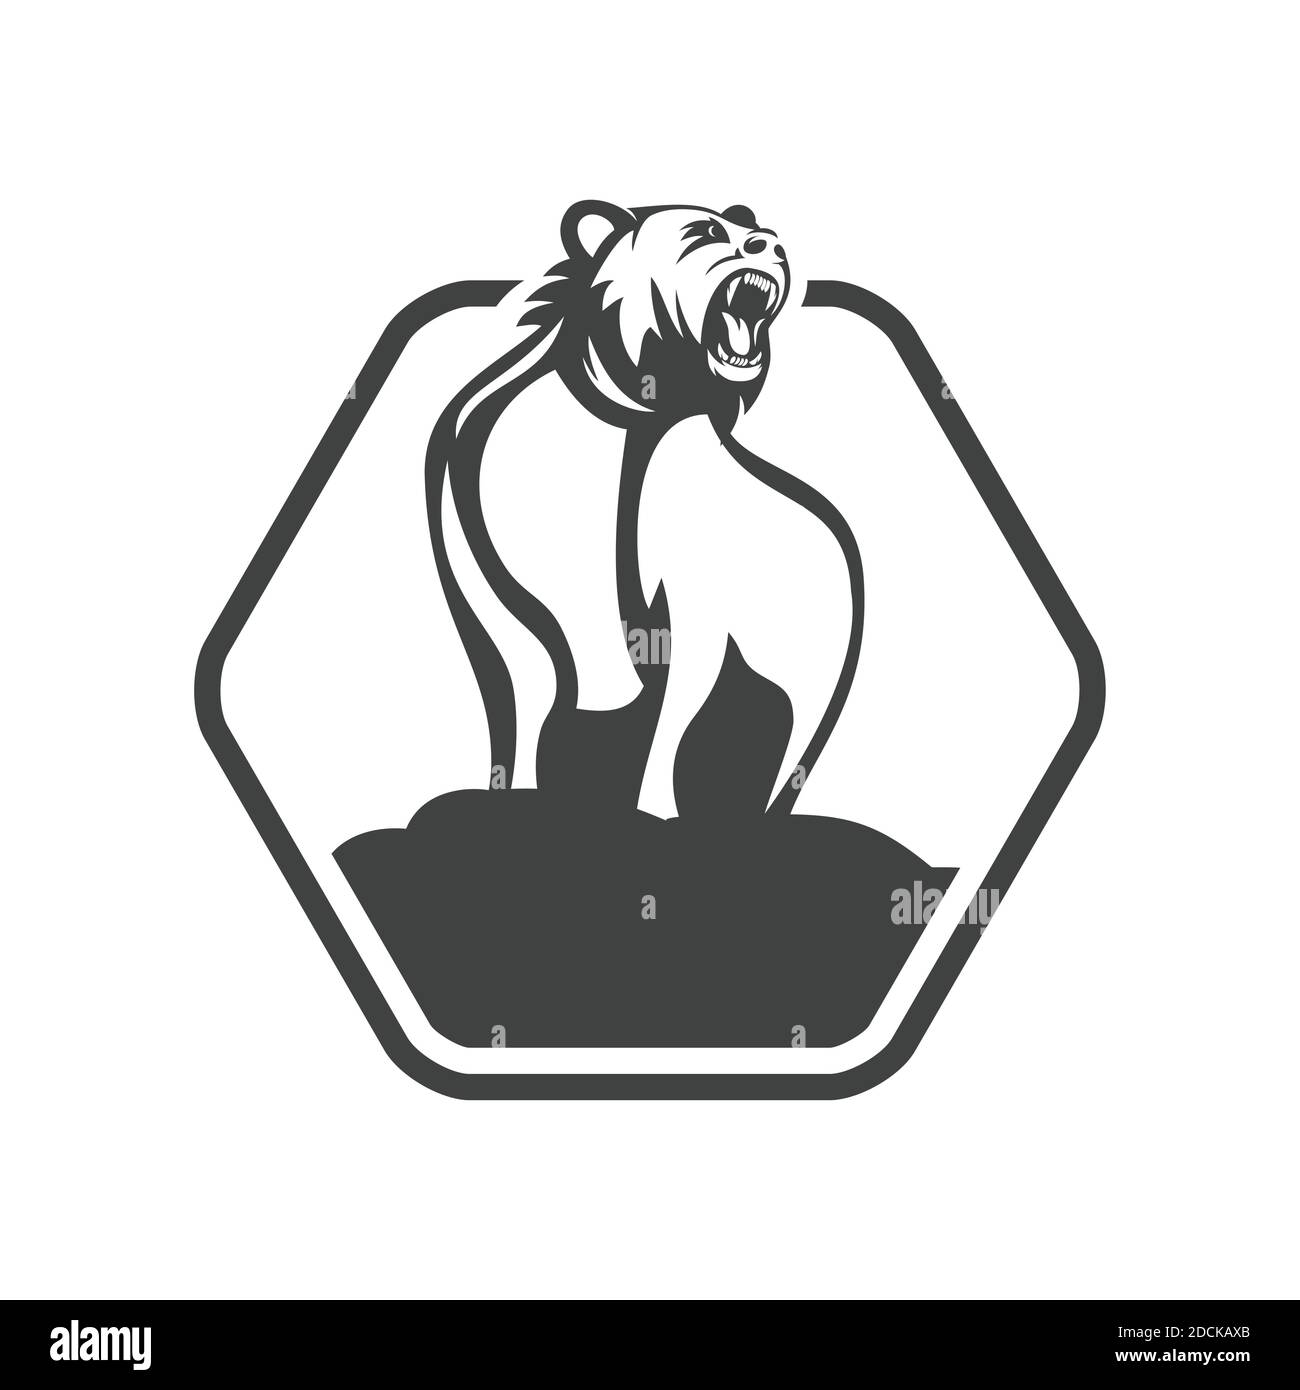 Bear mascot design illustration vector eps format , suitable for your design needs, logo, illustration, animation, etc. Stock Vector